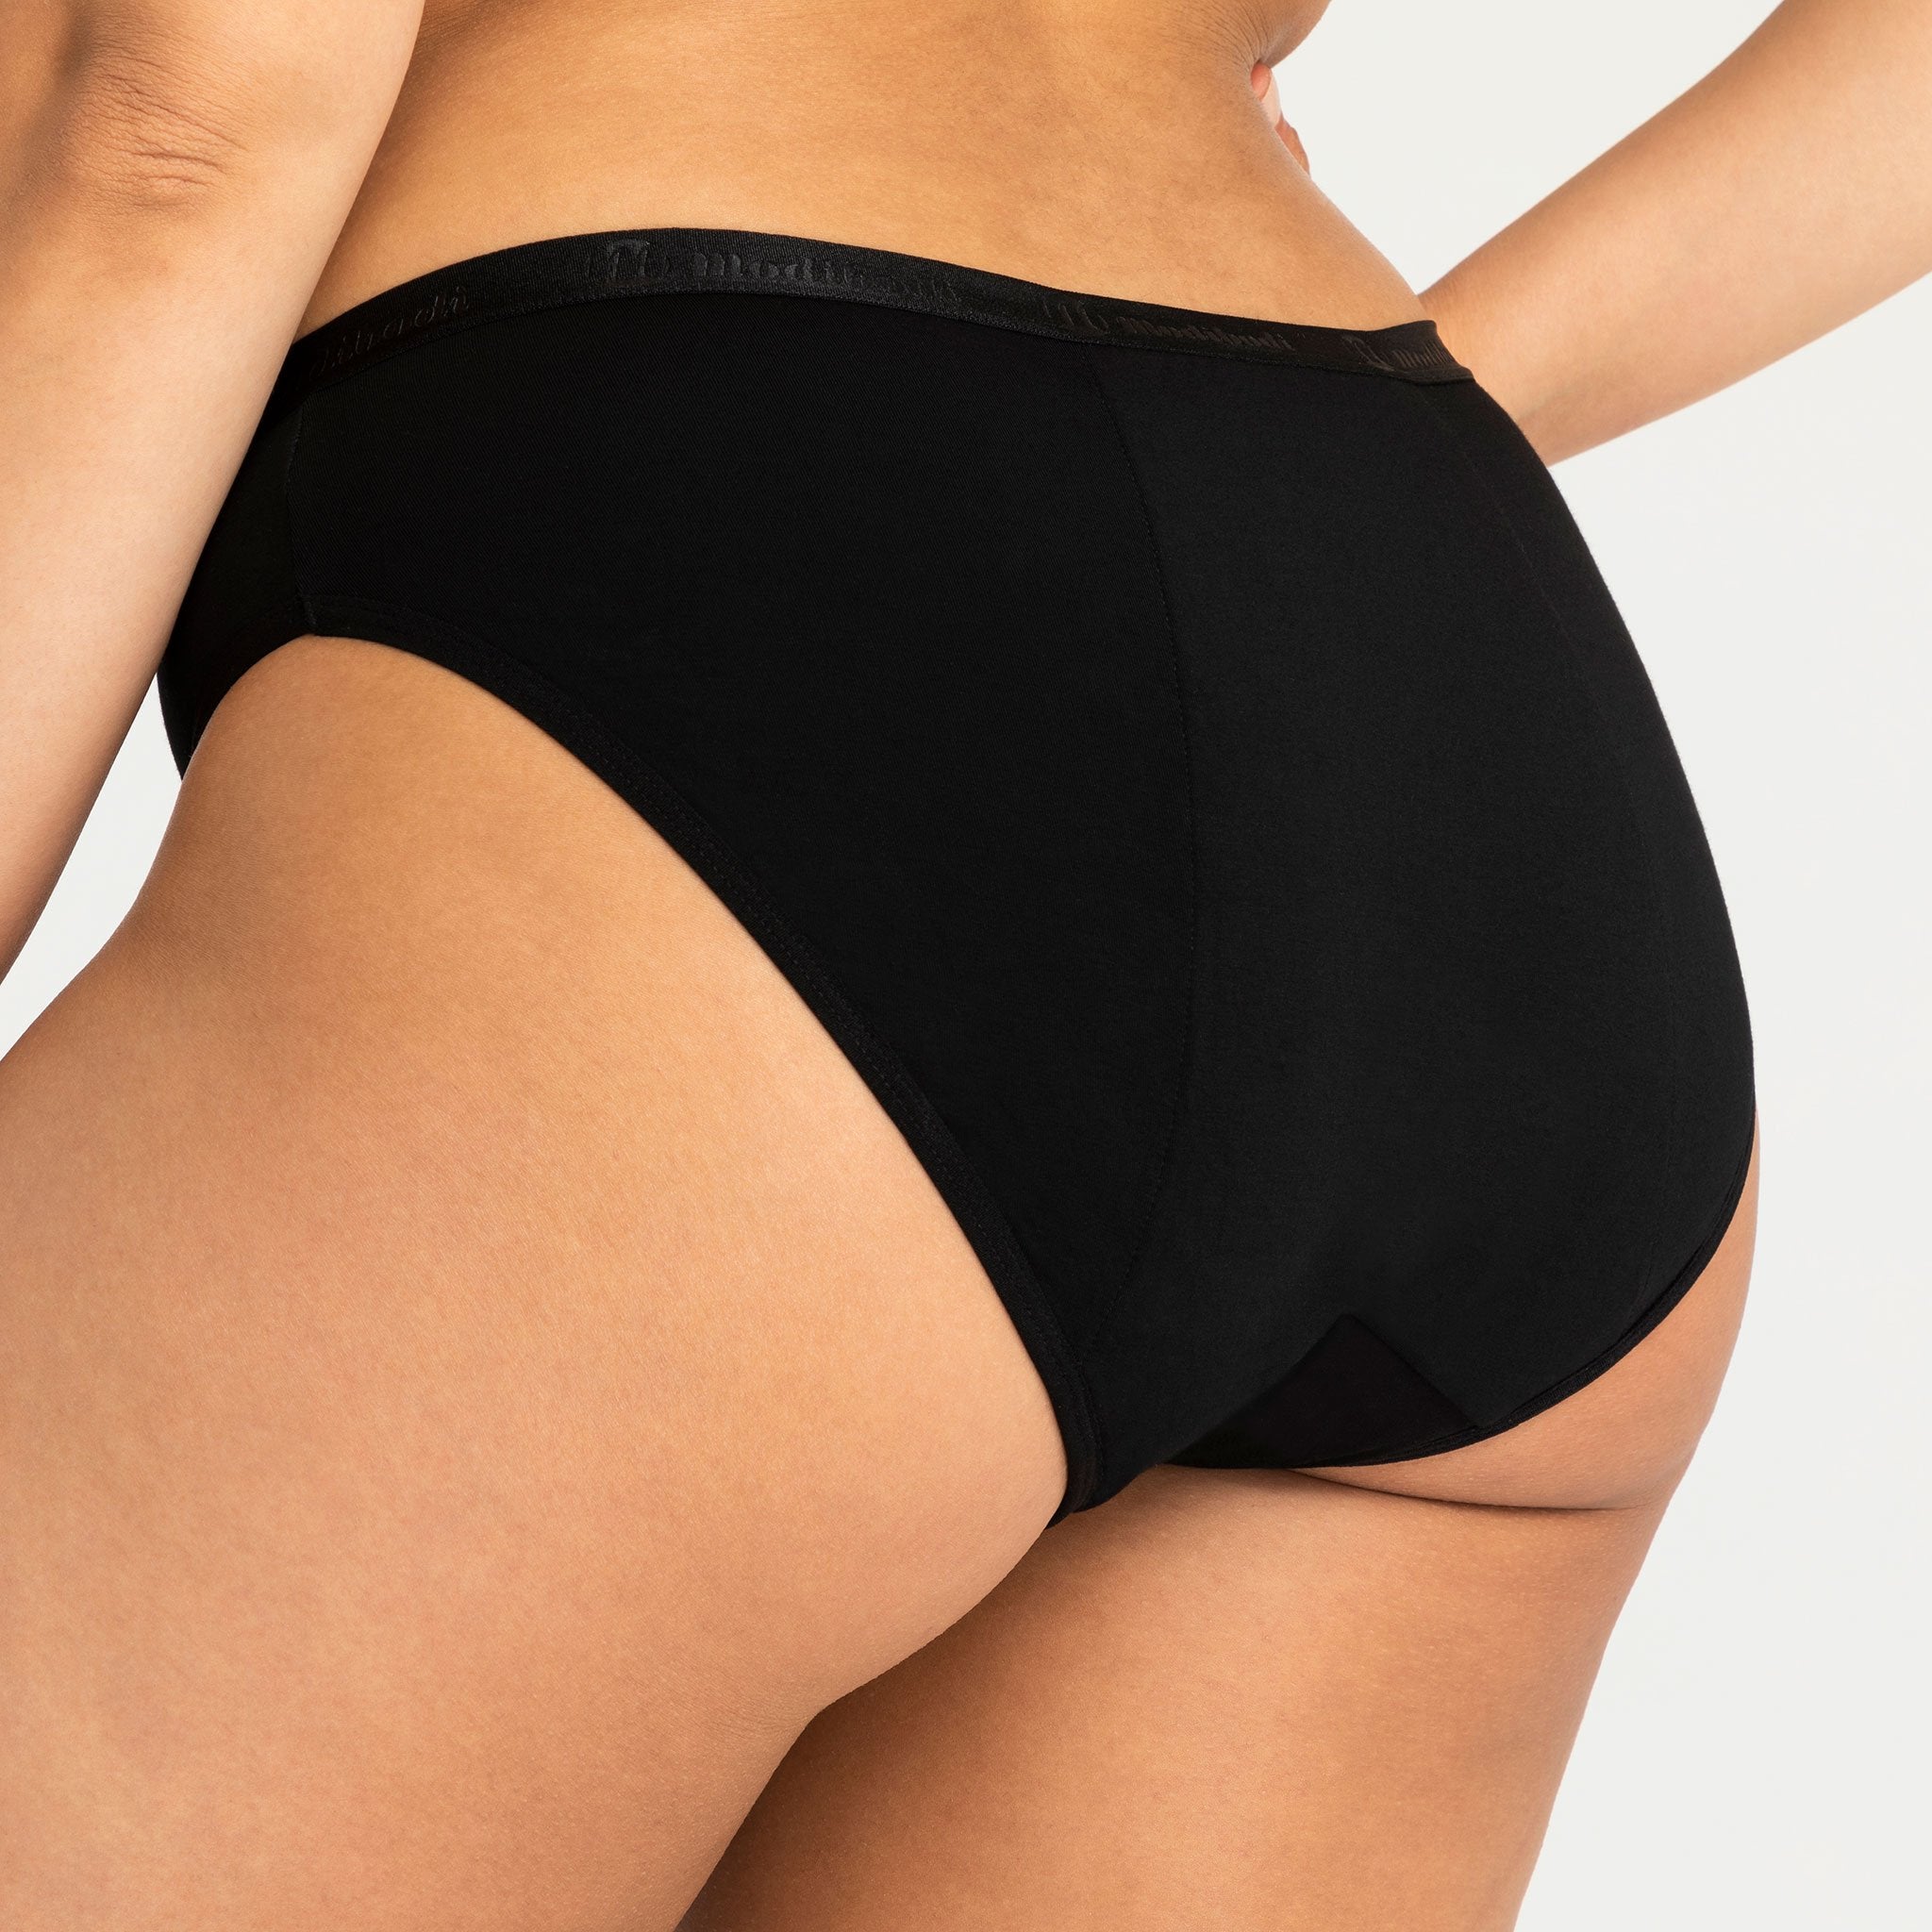 Modibodi Period Underwear Is the Future of Feminine Hygiene